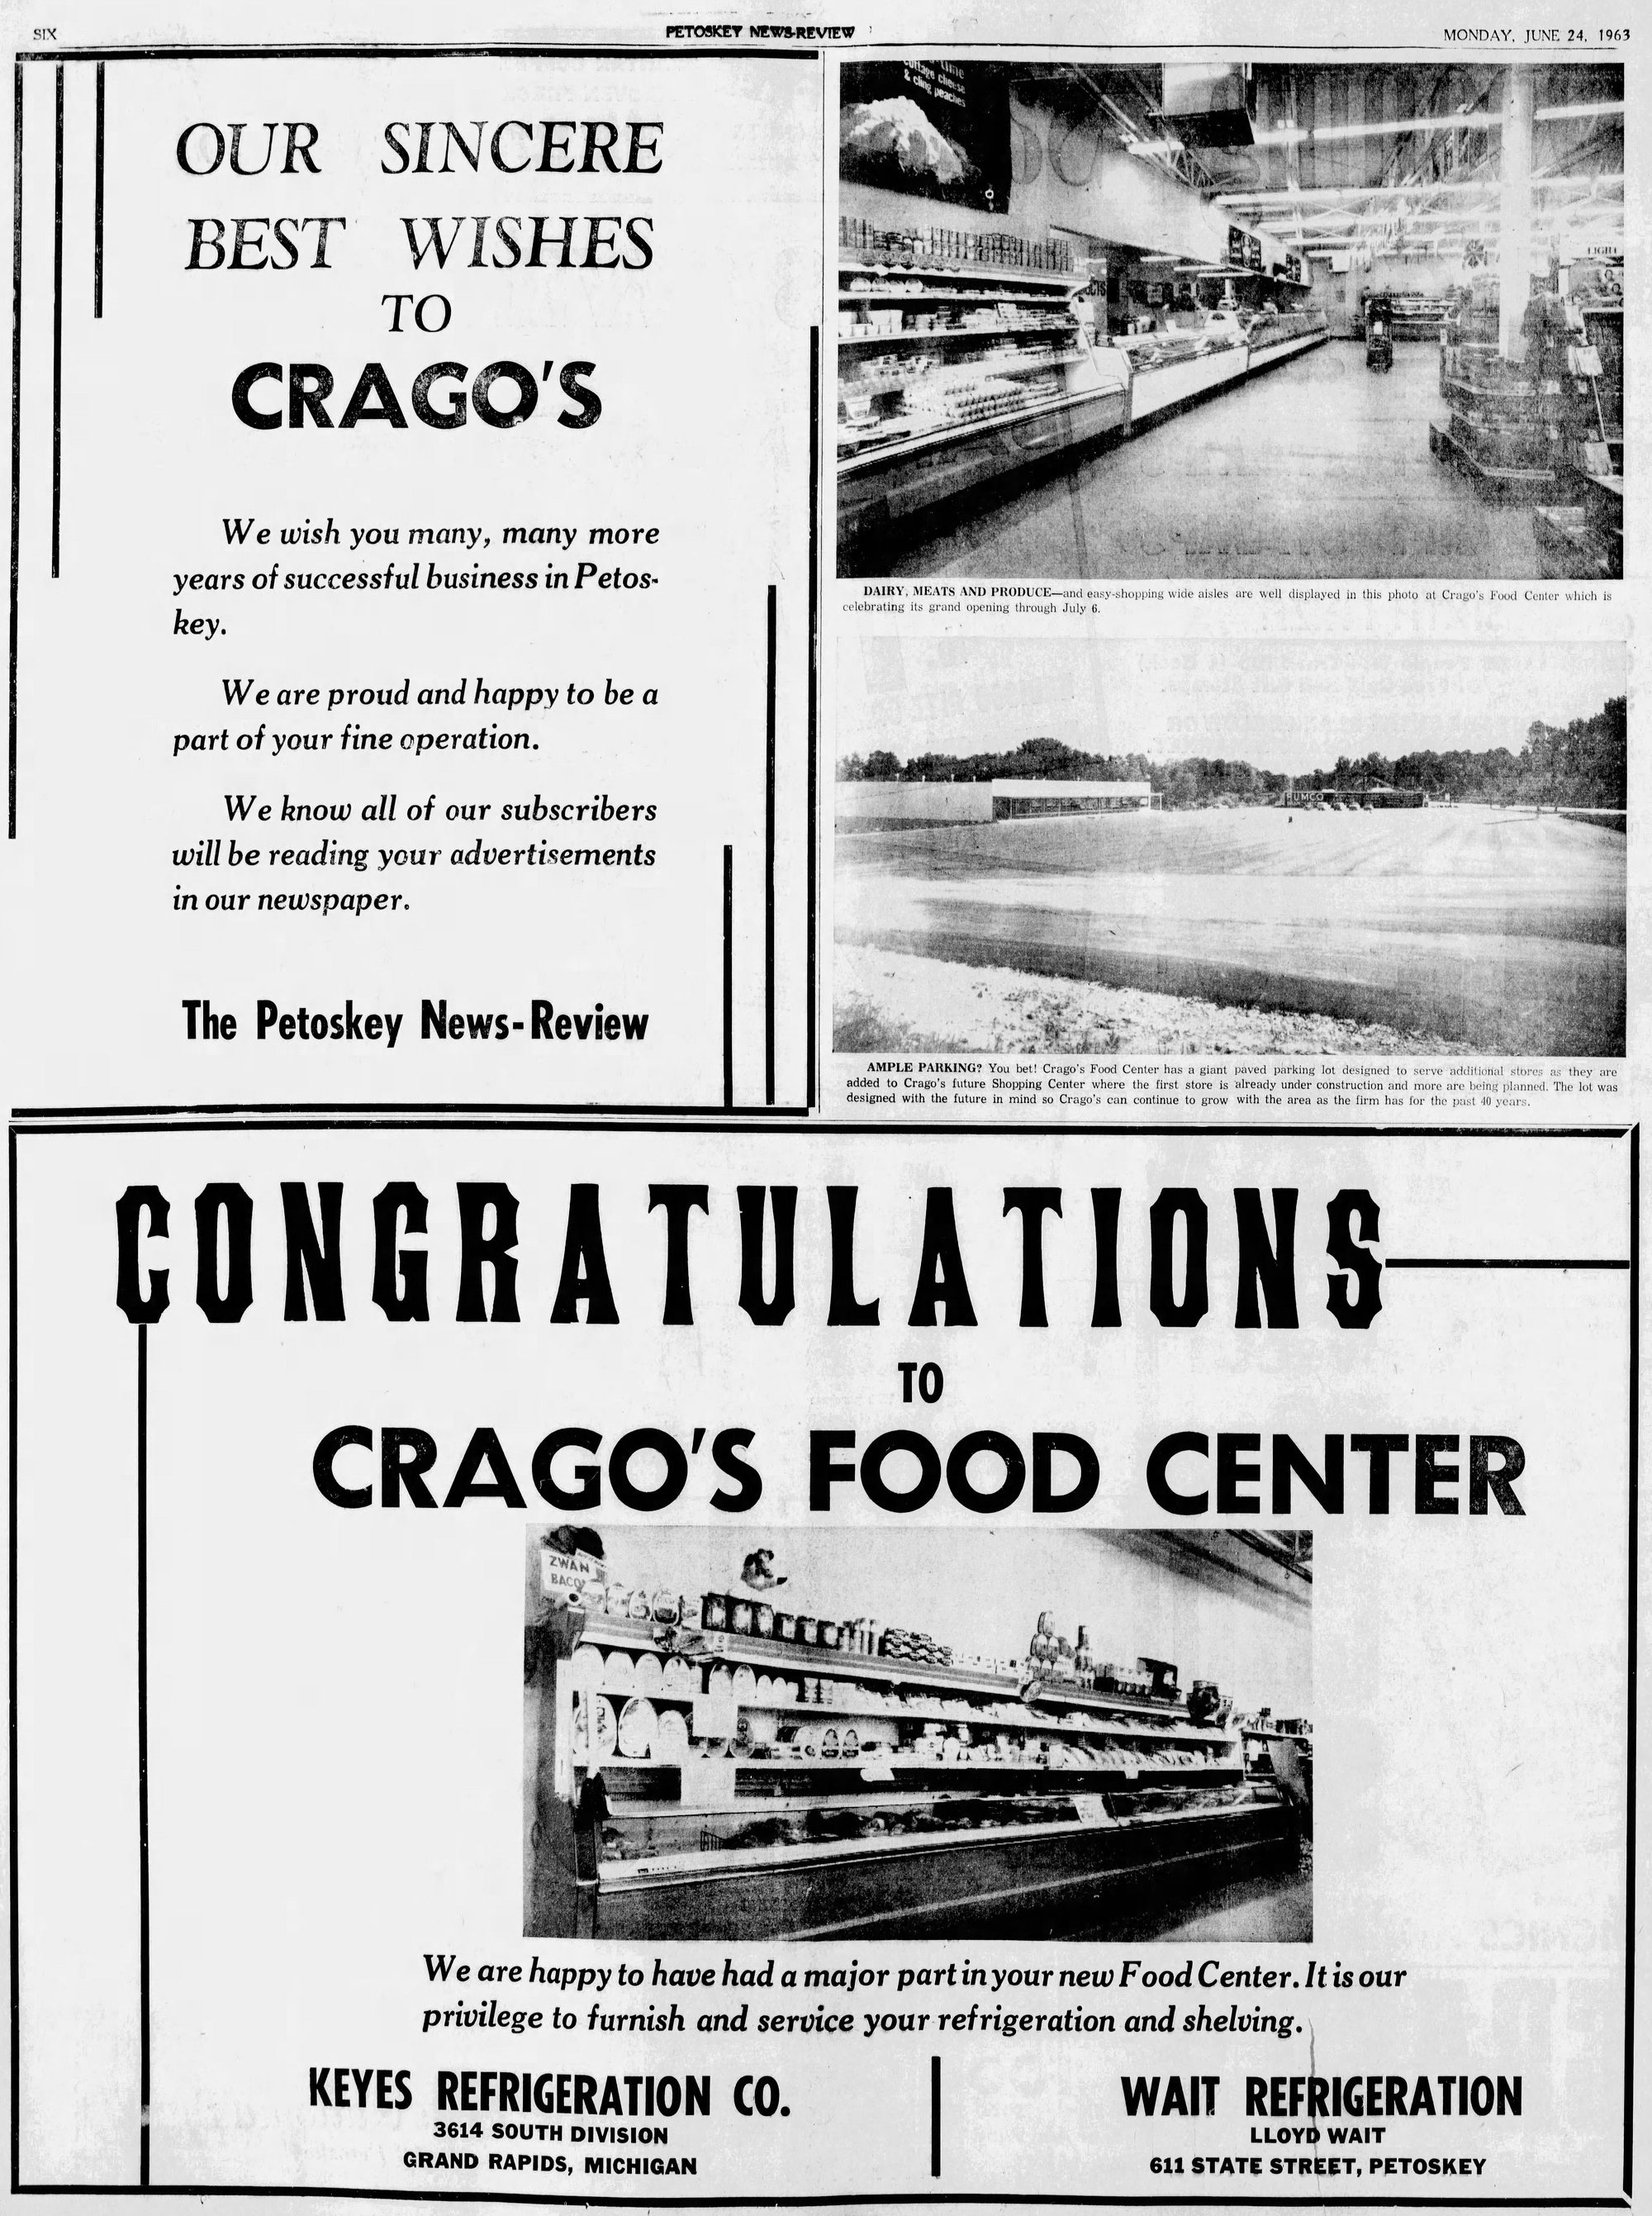 Cragos Shopping Center - June 24 1963 Ads (newer photo)